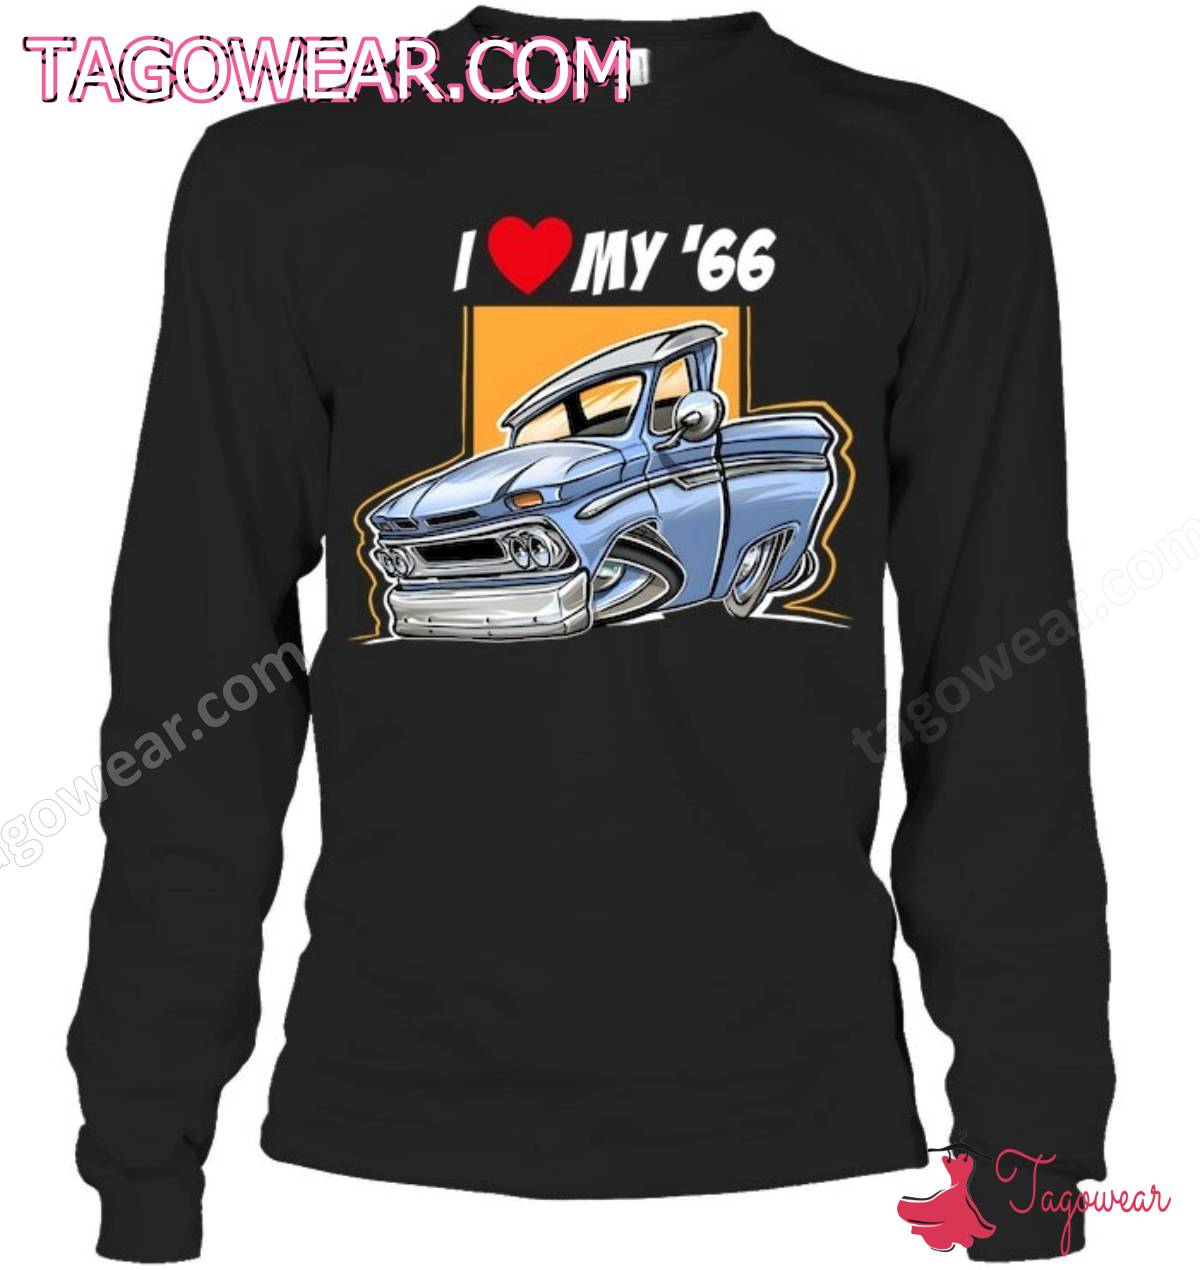 Chevy I Love My '66 Shirt a